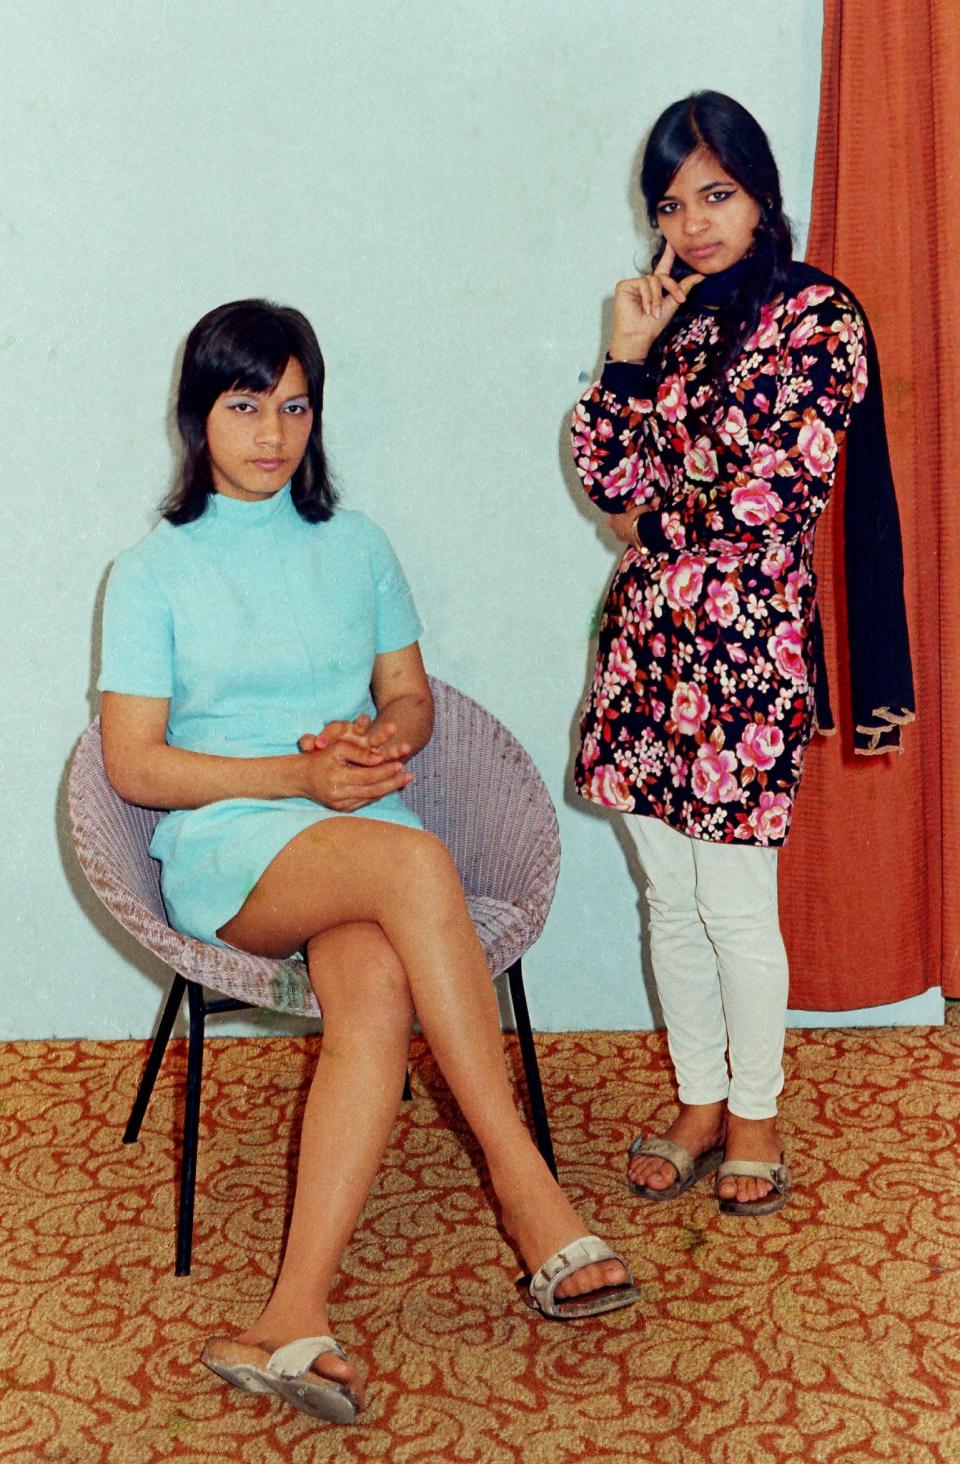 Young women, 1970s